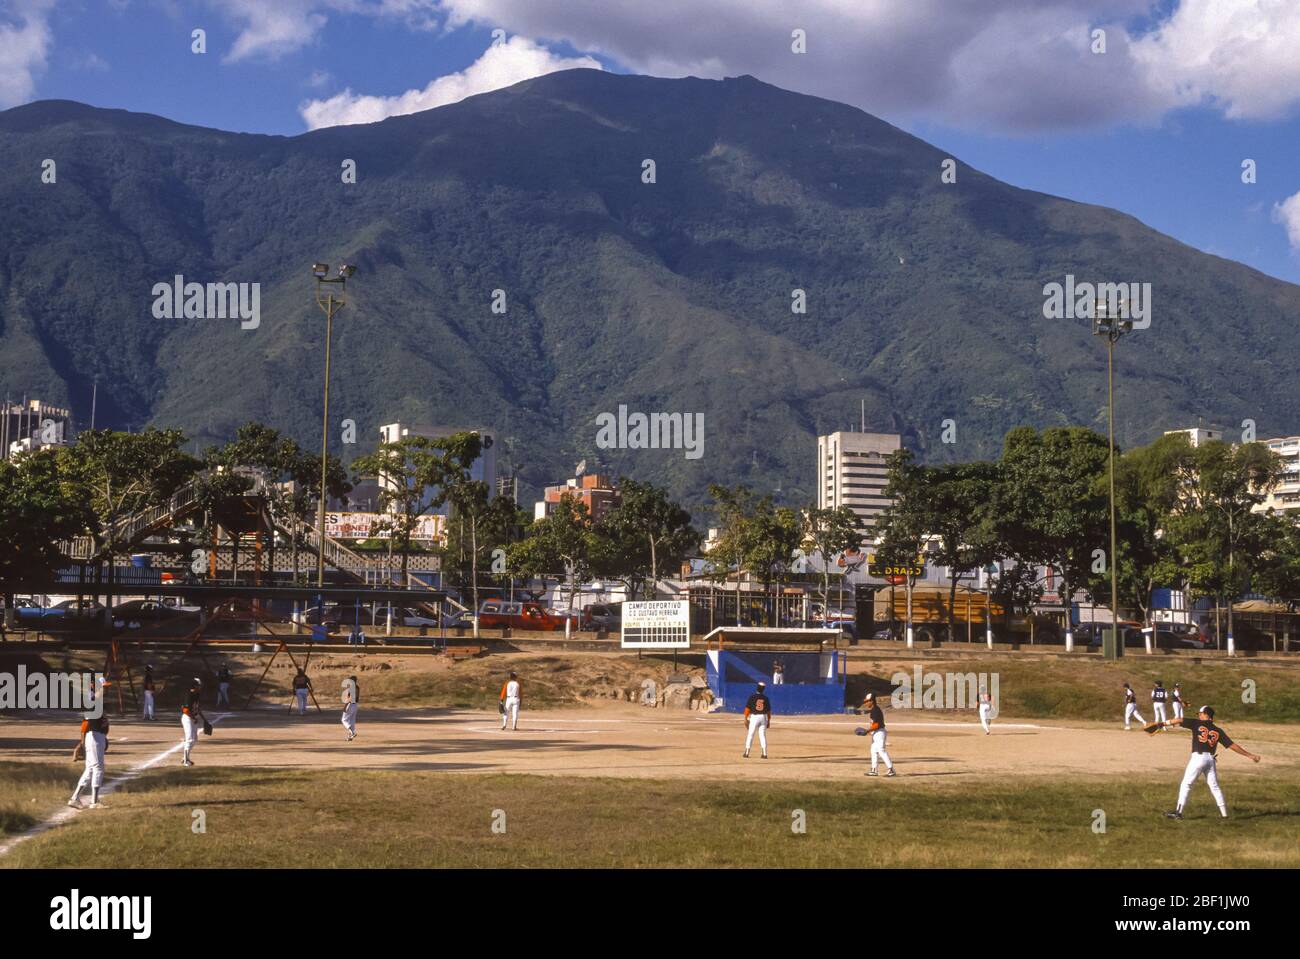 CARACAS, VENEZUELA - Baseball practice and Avila mountain at rear in 1988. Stock Photo